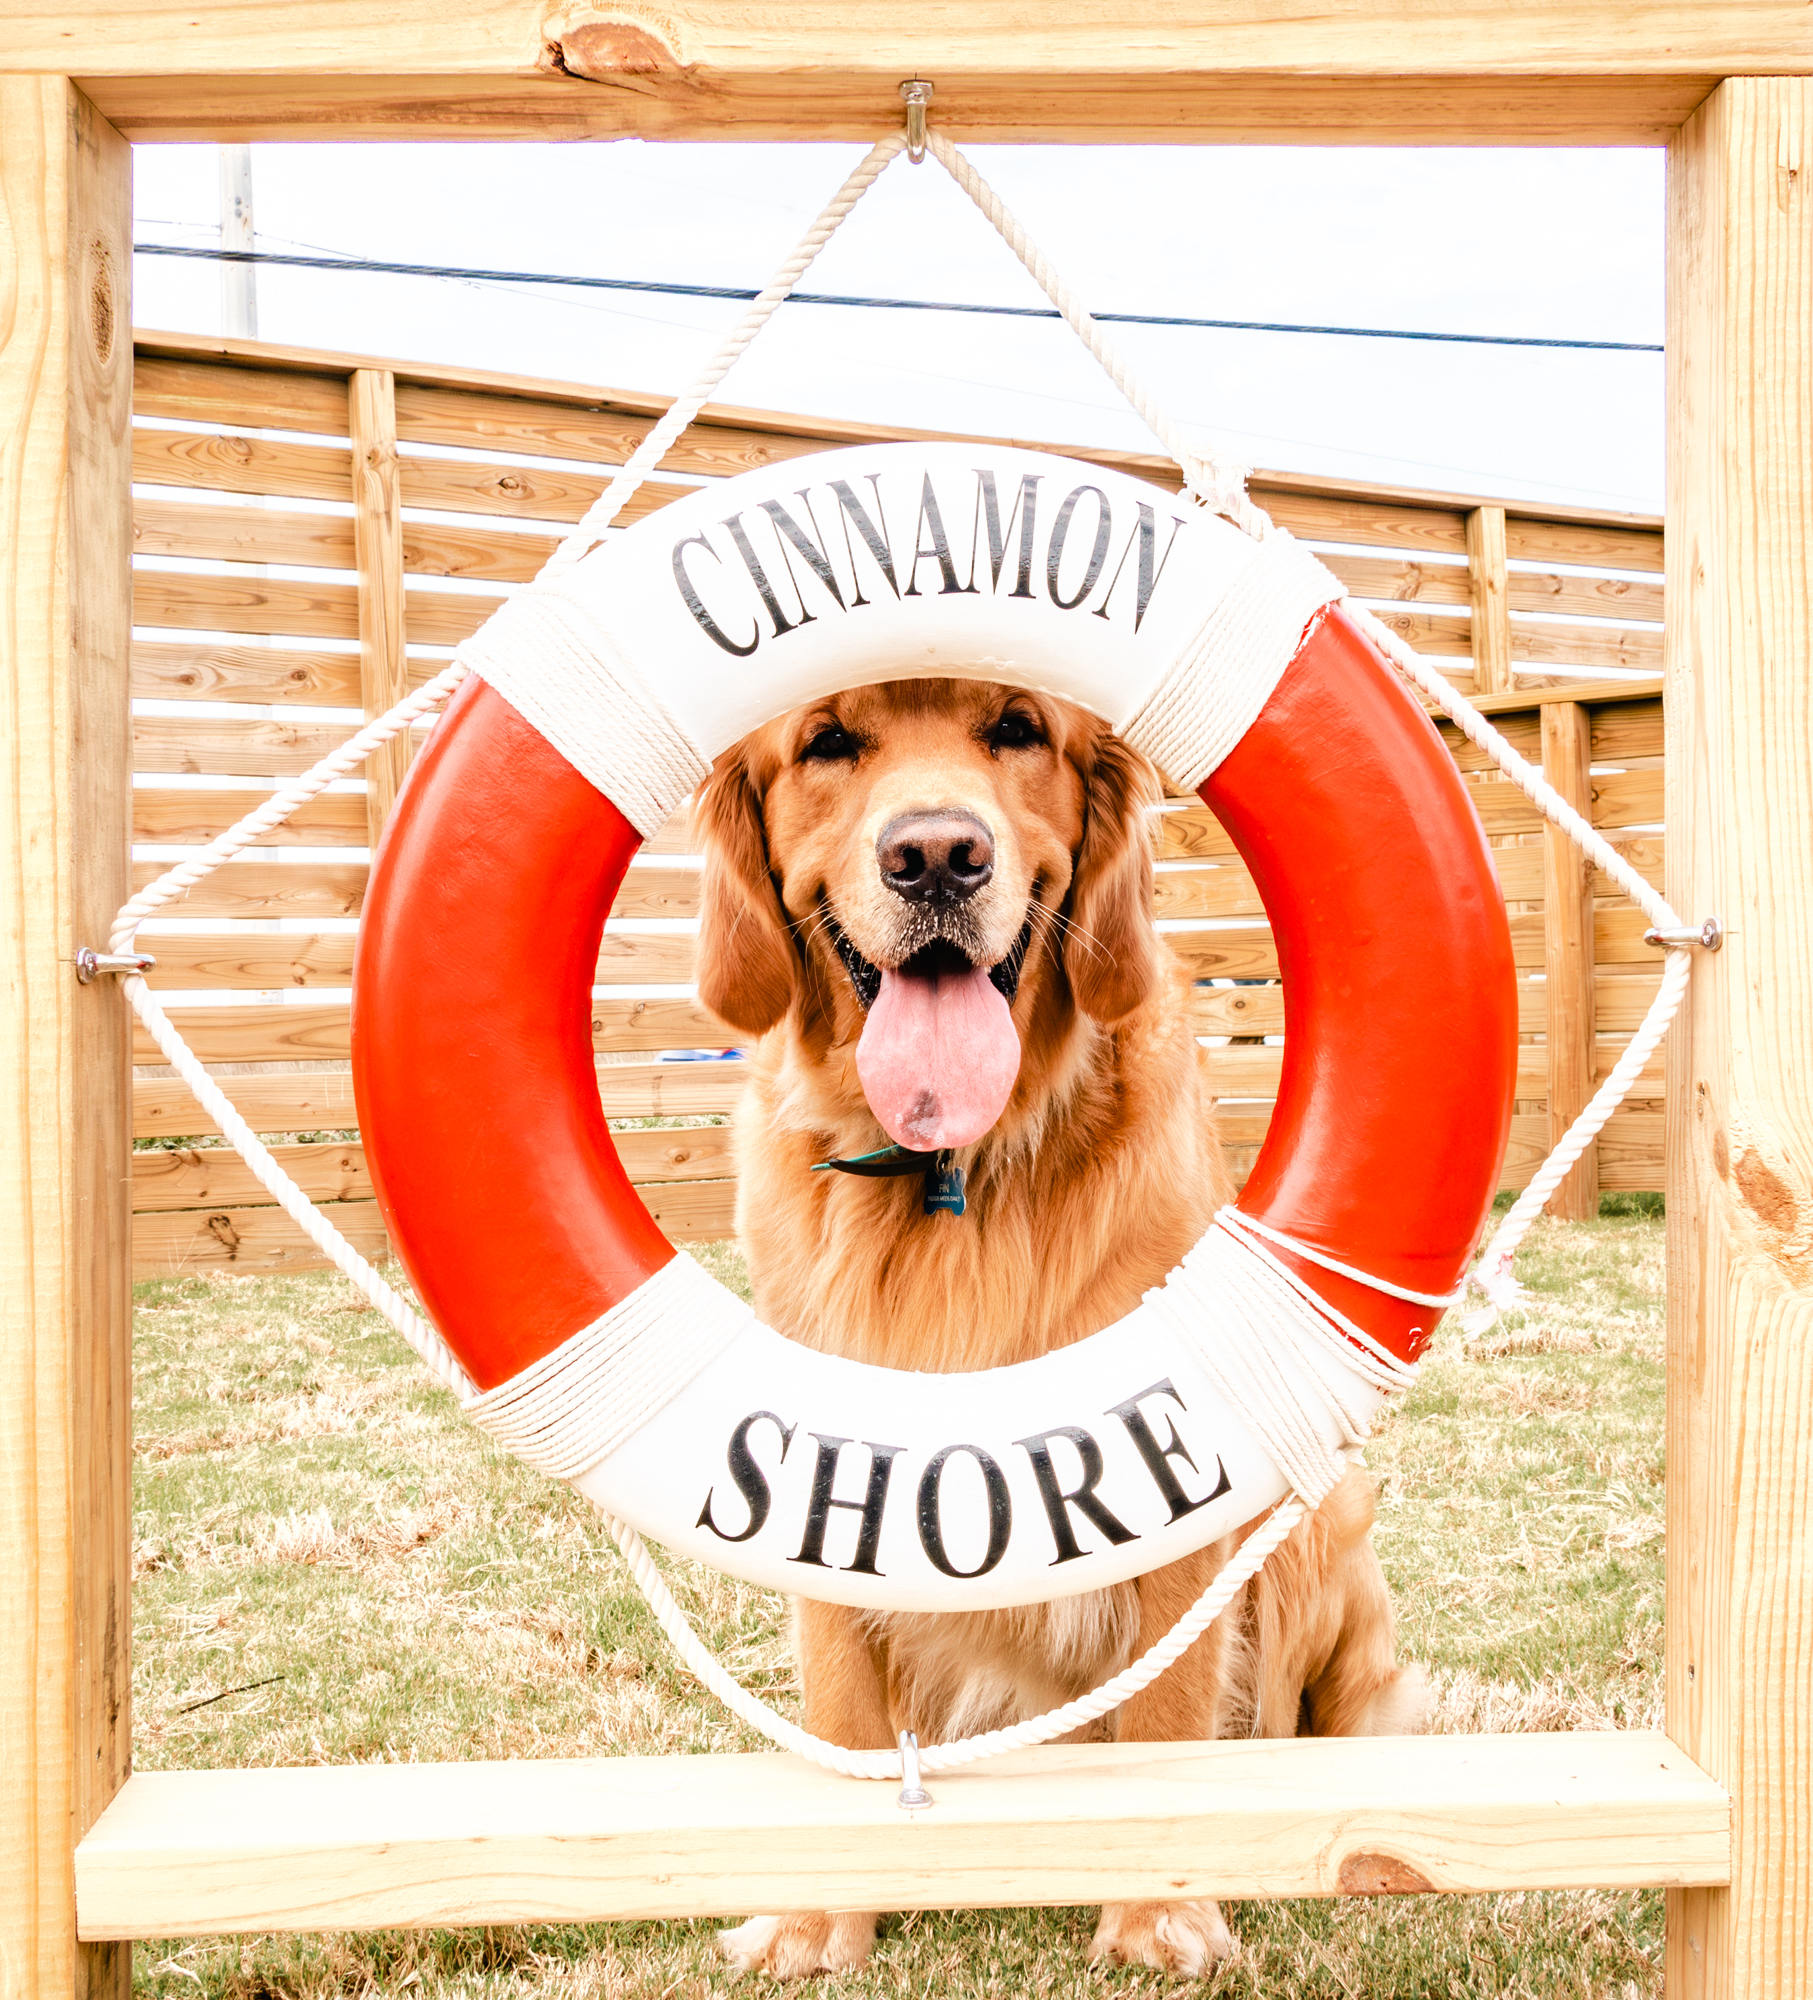 dog park cinnamon shore port aransas 